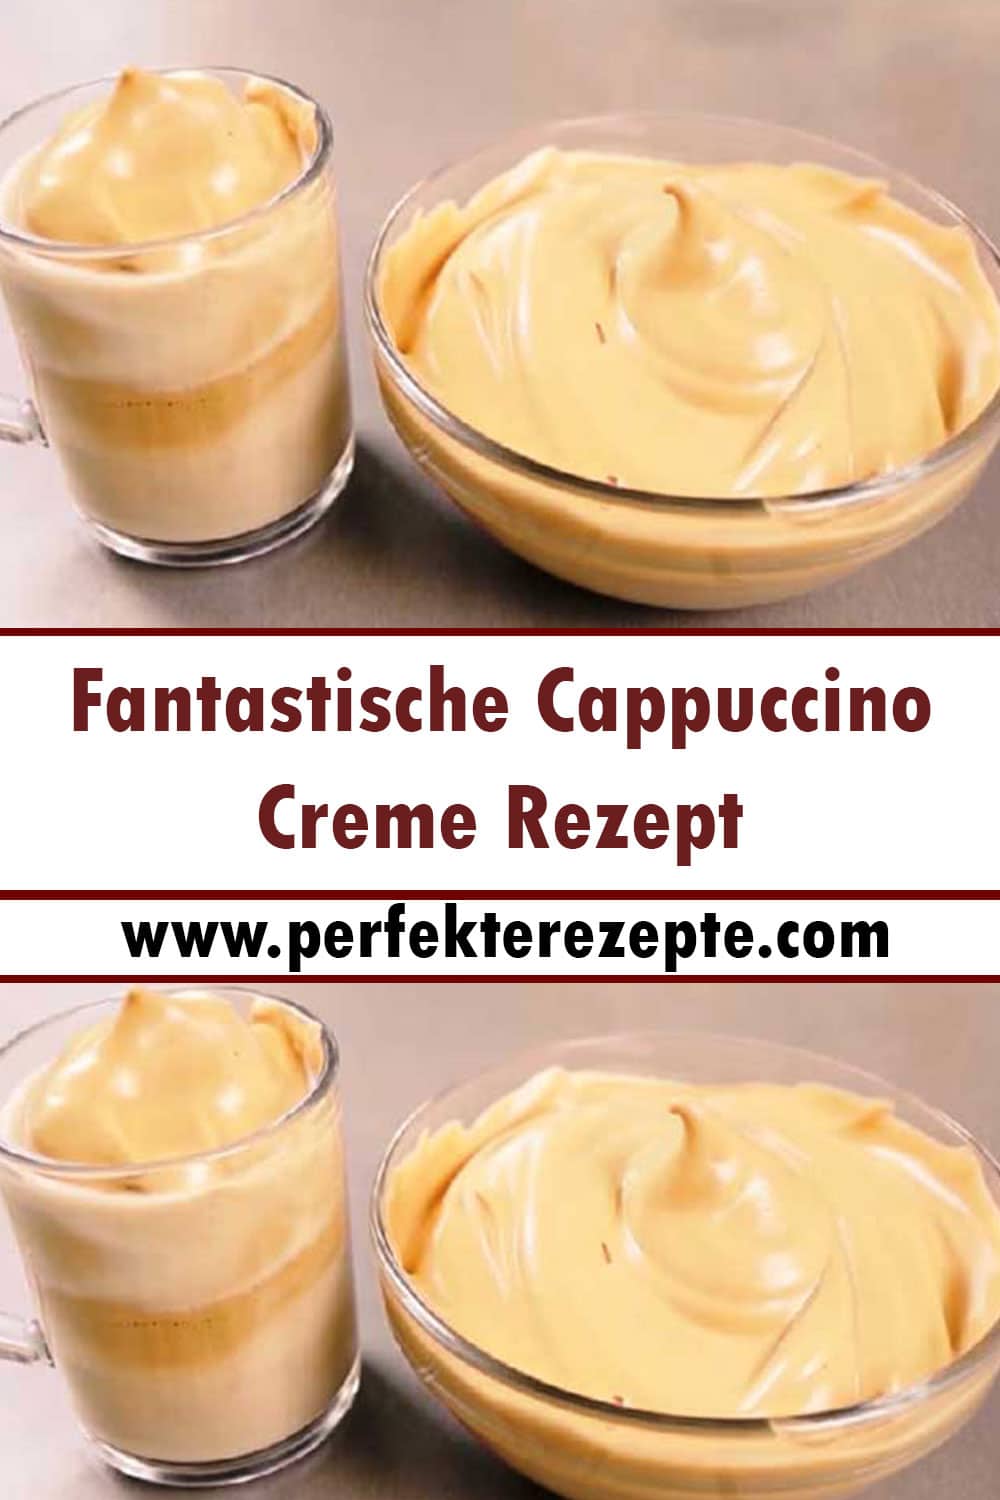 Fantastische Cappuccino Creme Rezept in weniger als 5 Minuten fertig!